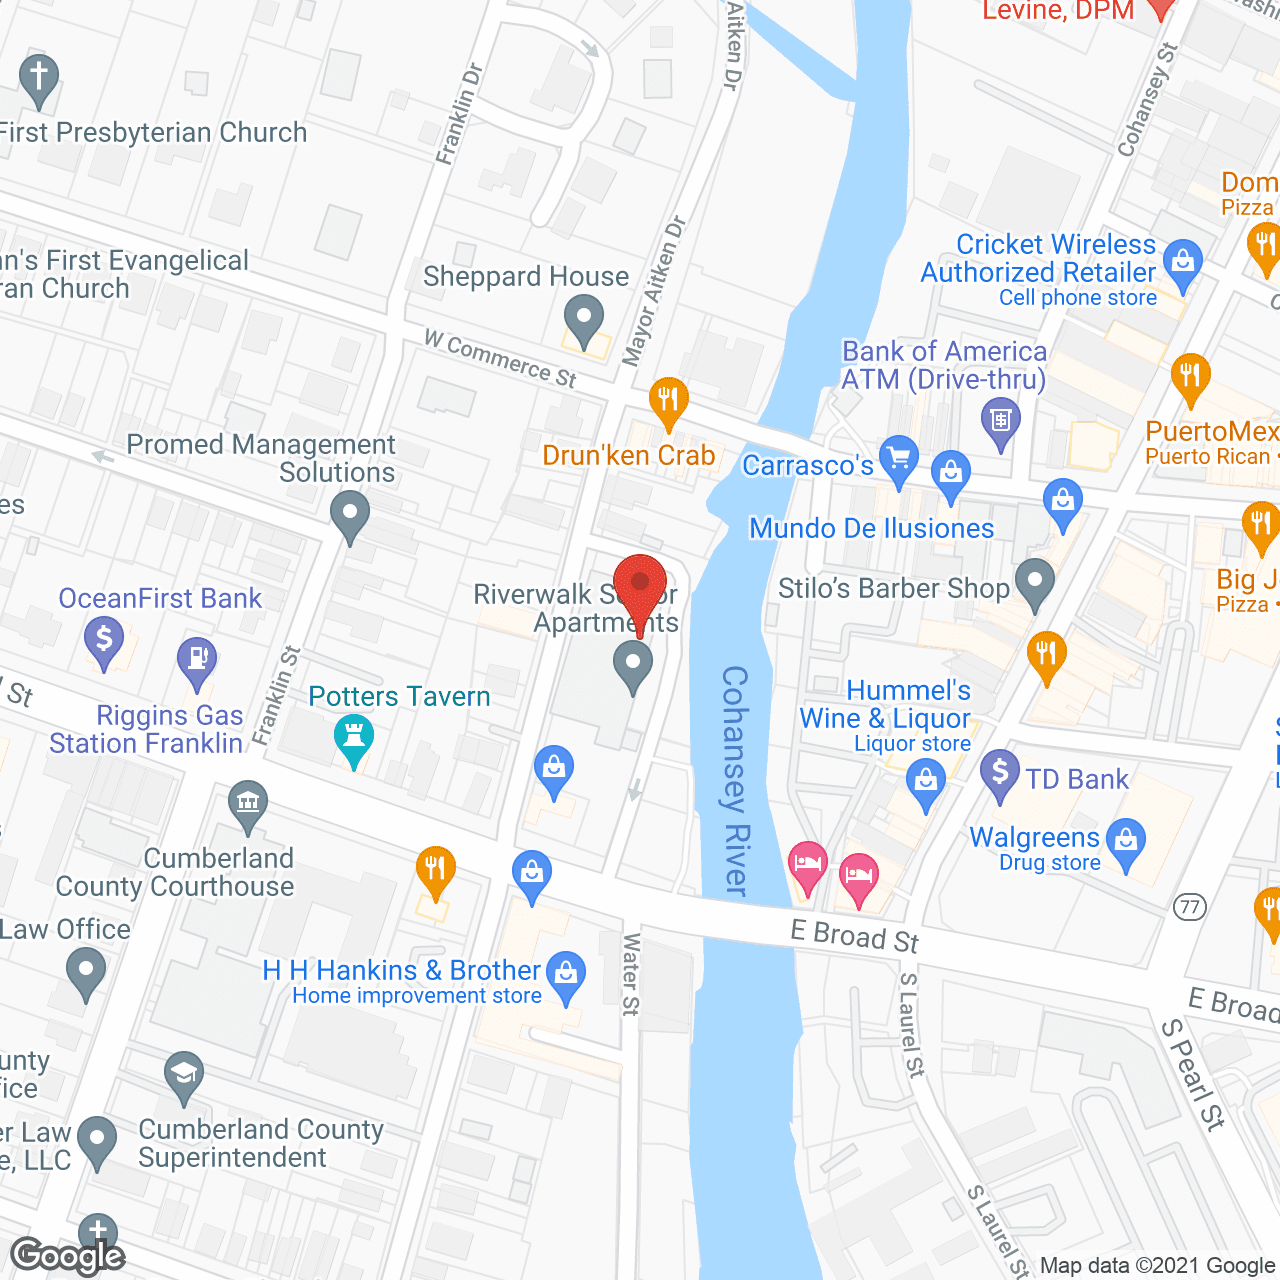 Riverwalk Senior Apartments in google map